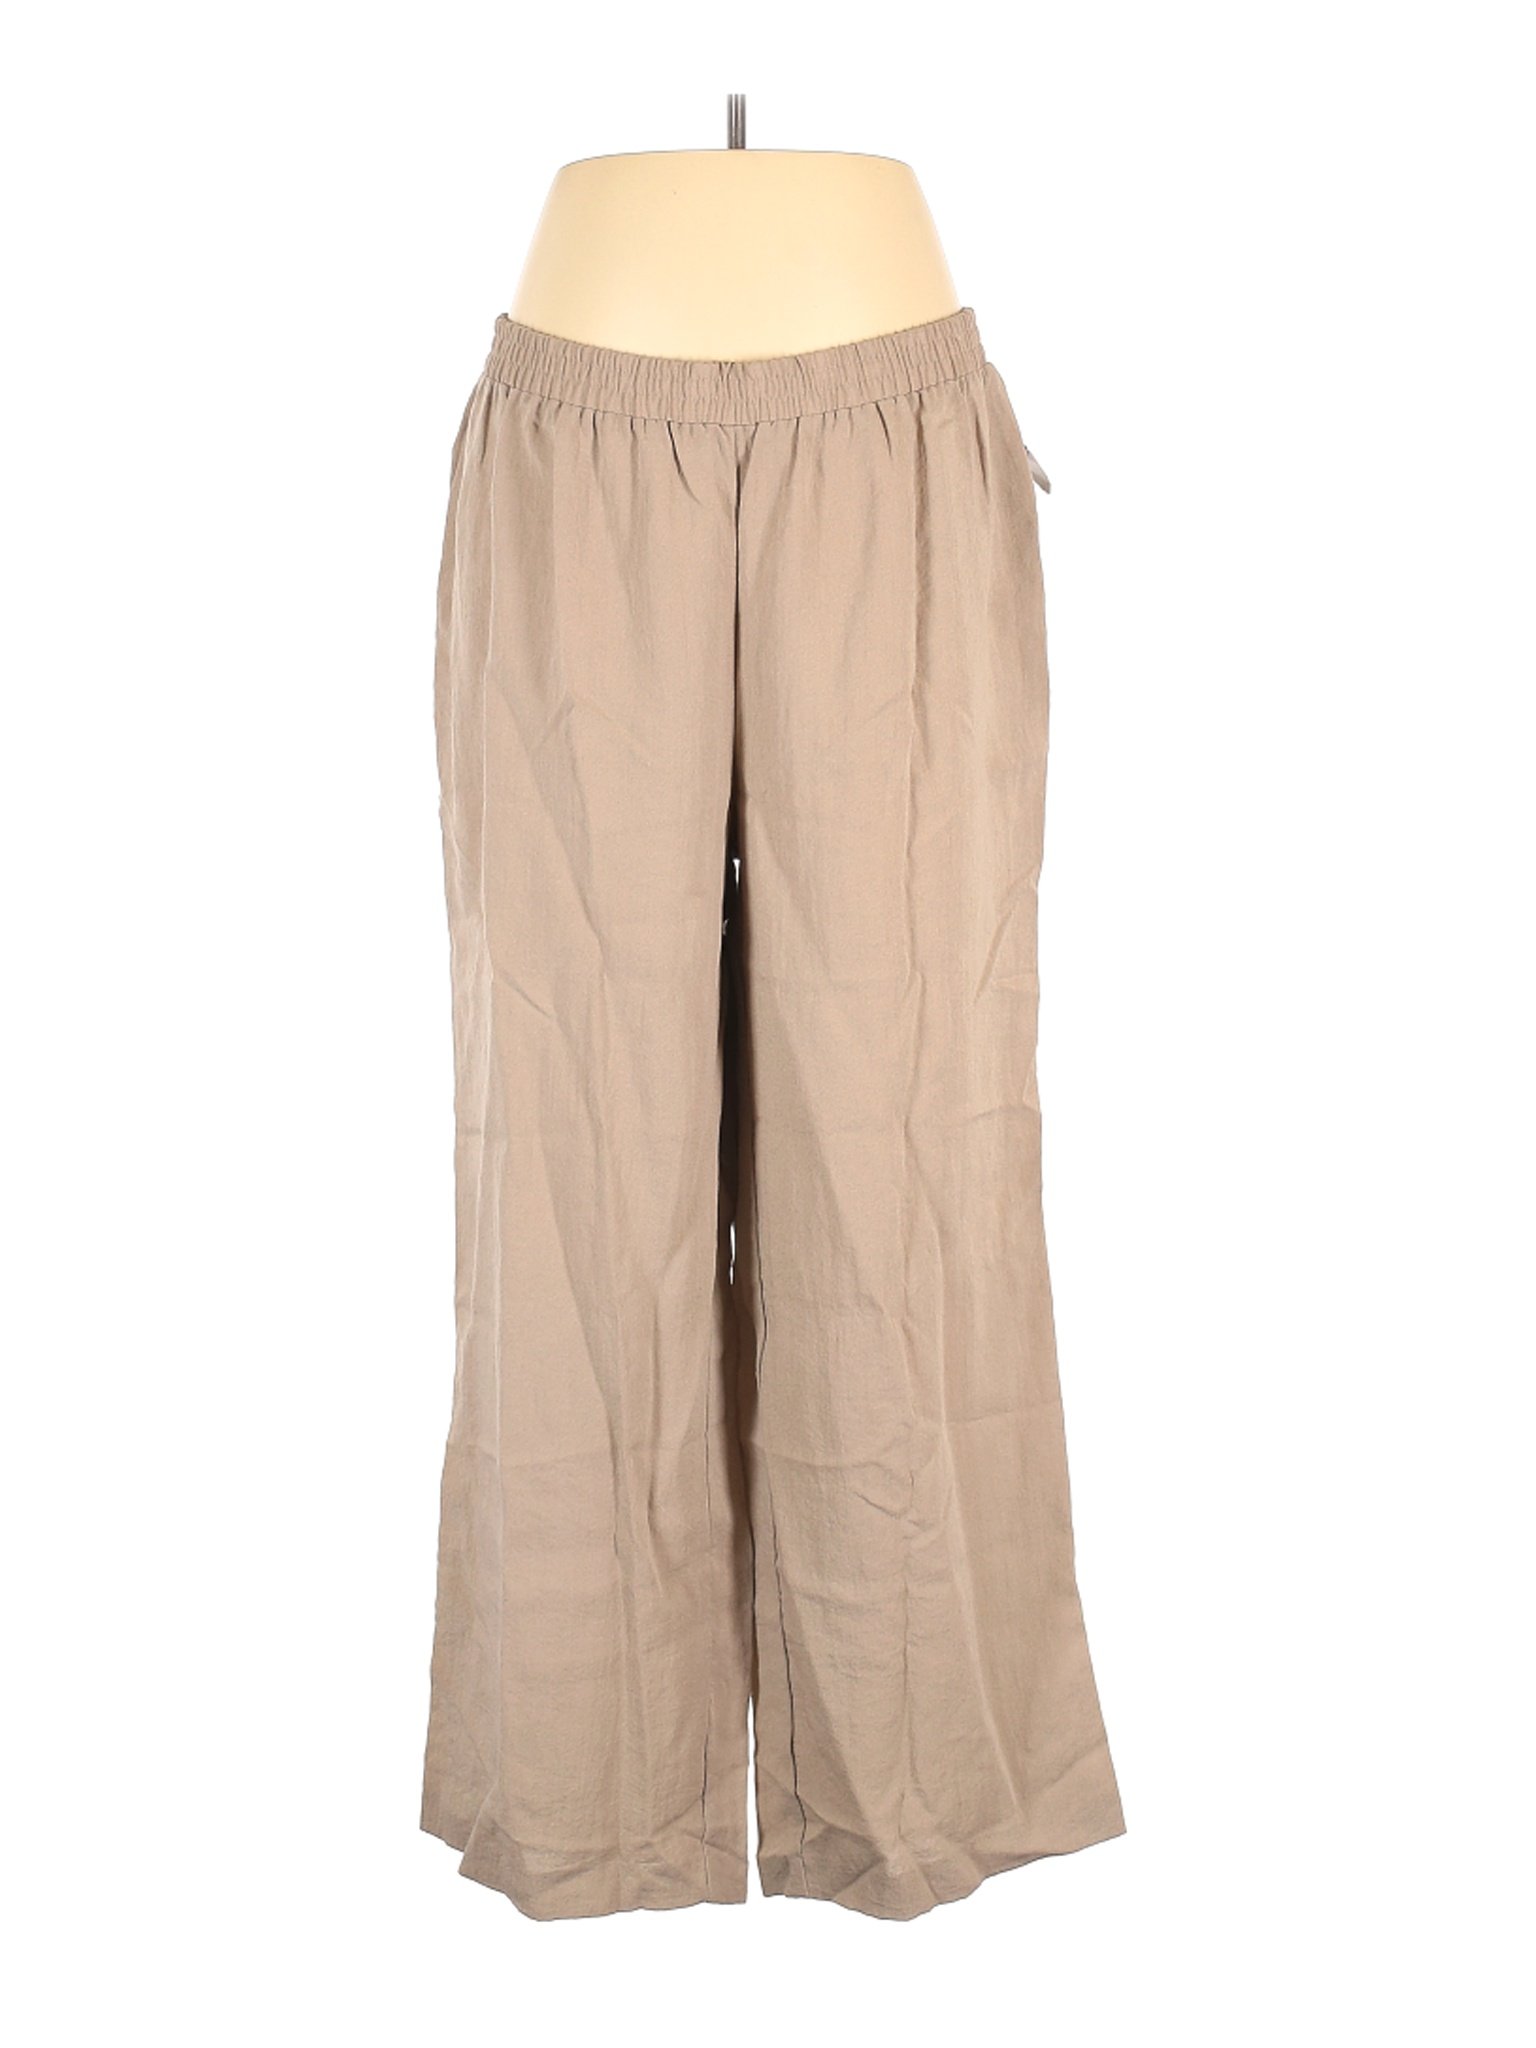 NWT Maggie Barnes Women Brown Casual Pants 1X Plus | eBay